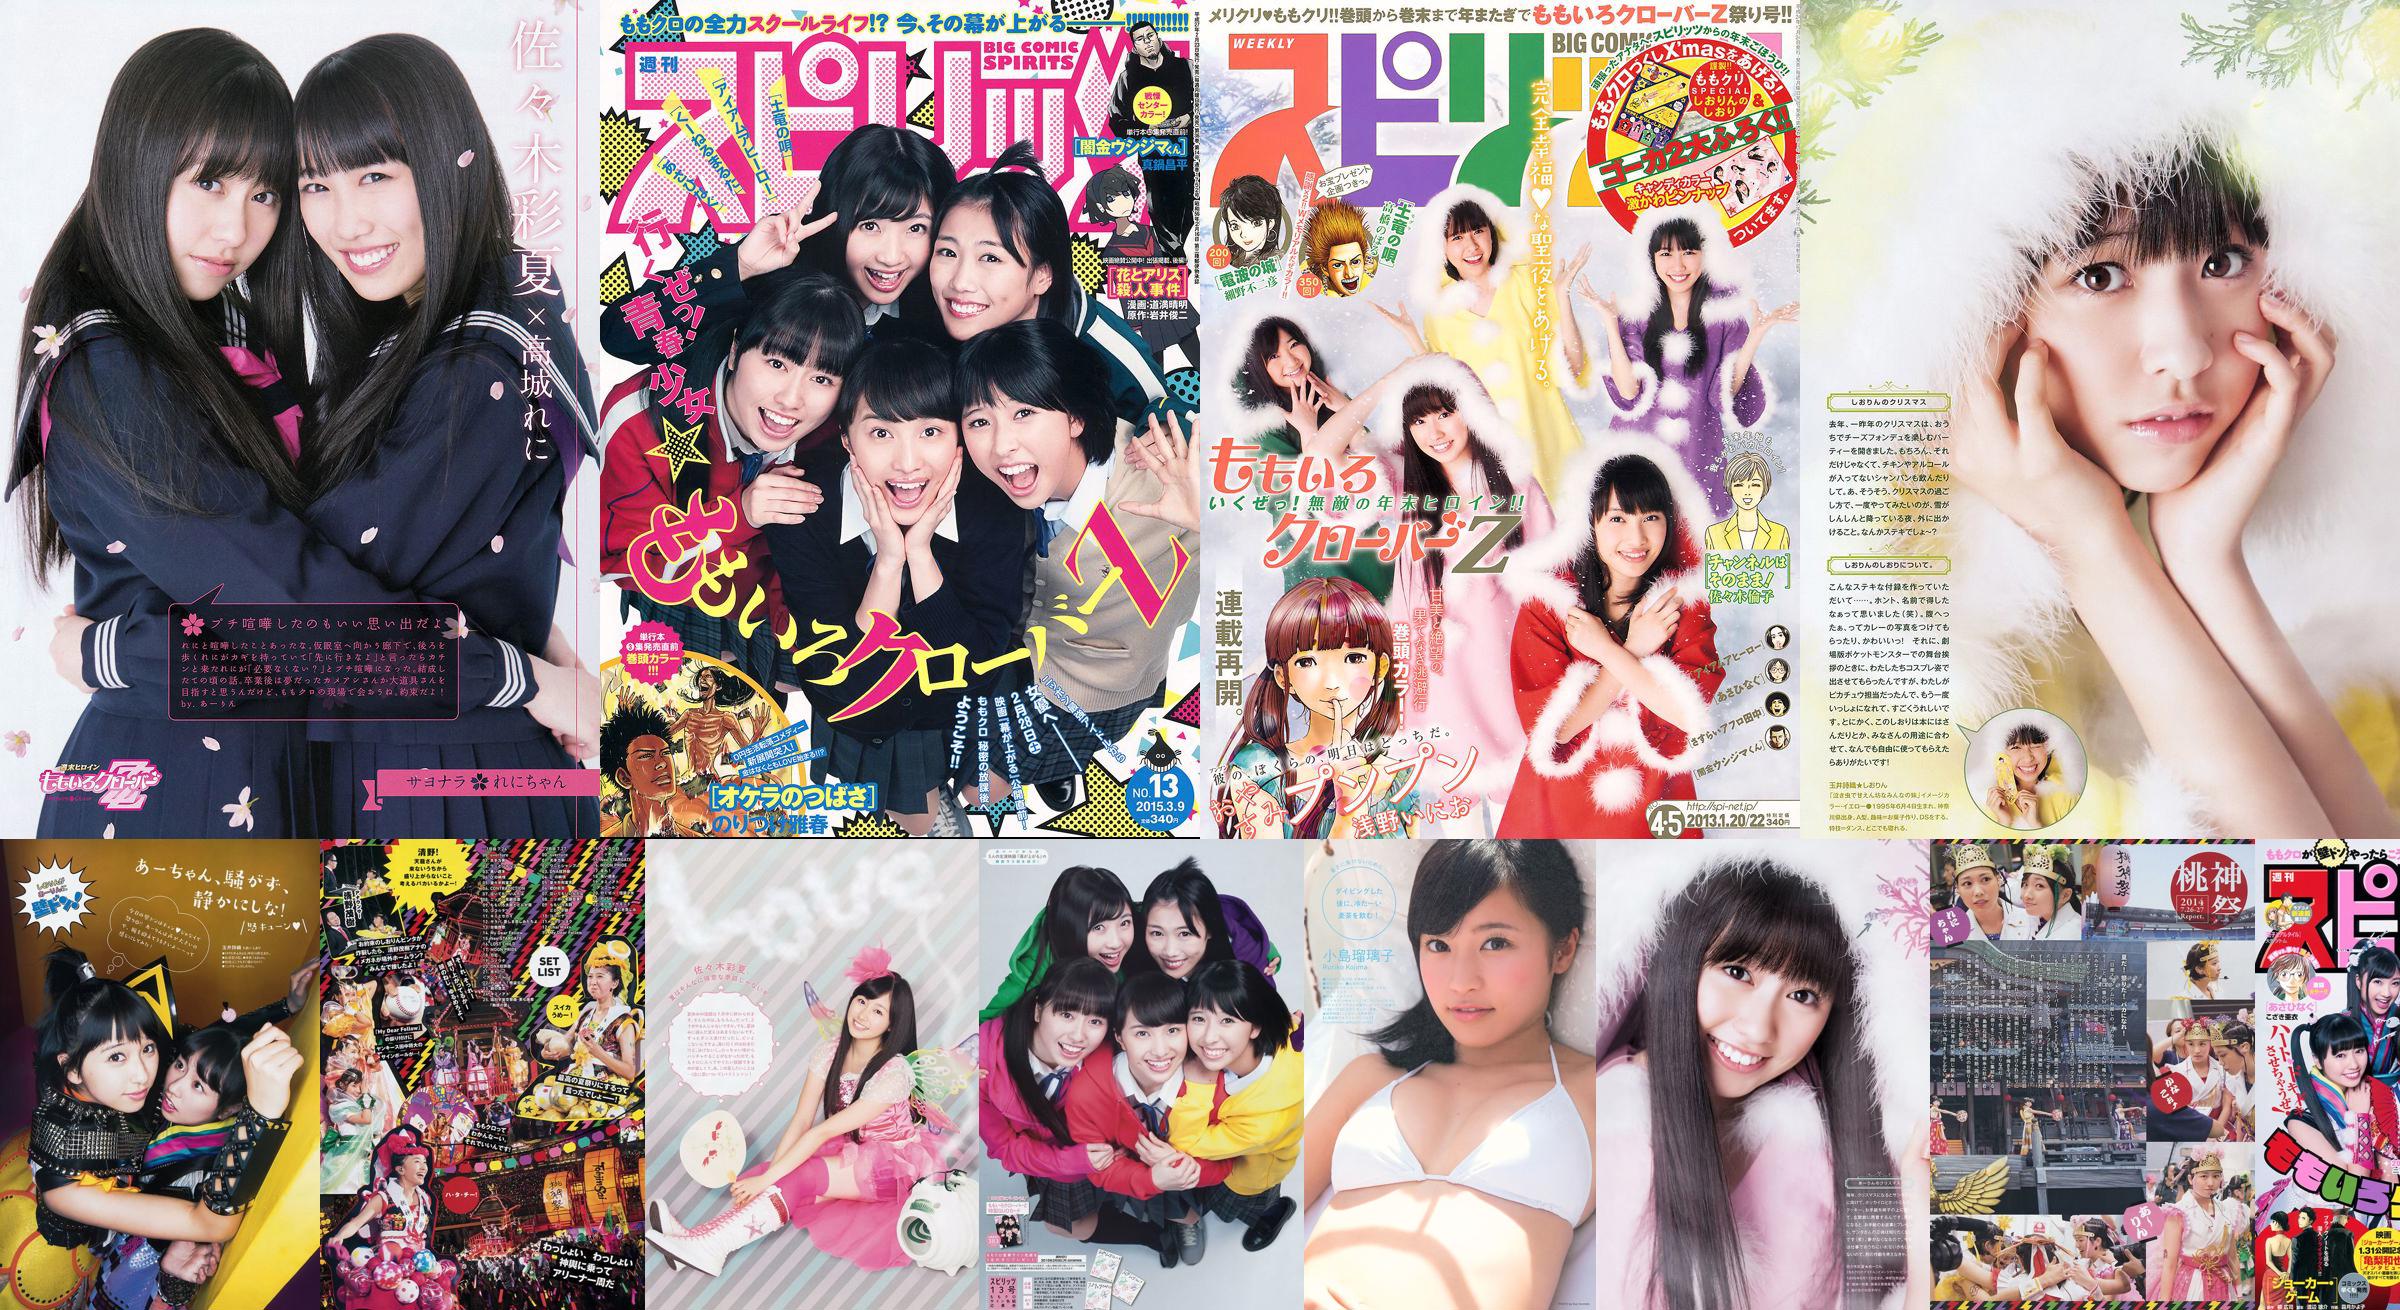 [Weekly Big Comic Spirits] も も い ろ ク ロ ー バ ー Z 2015 nr 13 Photo Magazine No.22d0a9 Strona 1